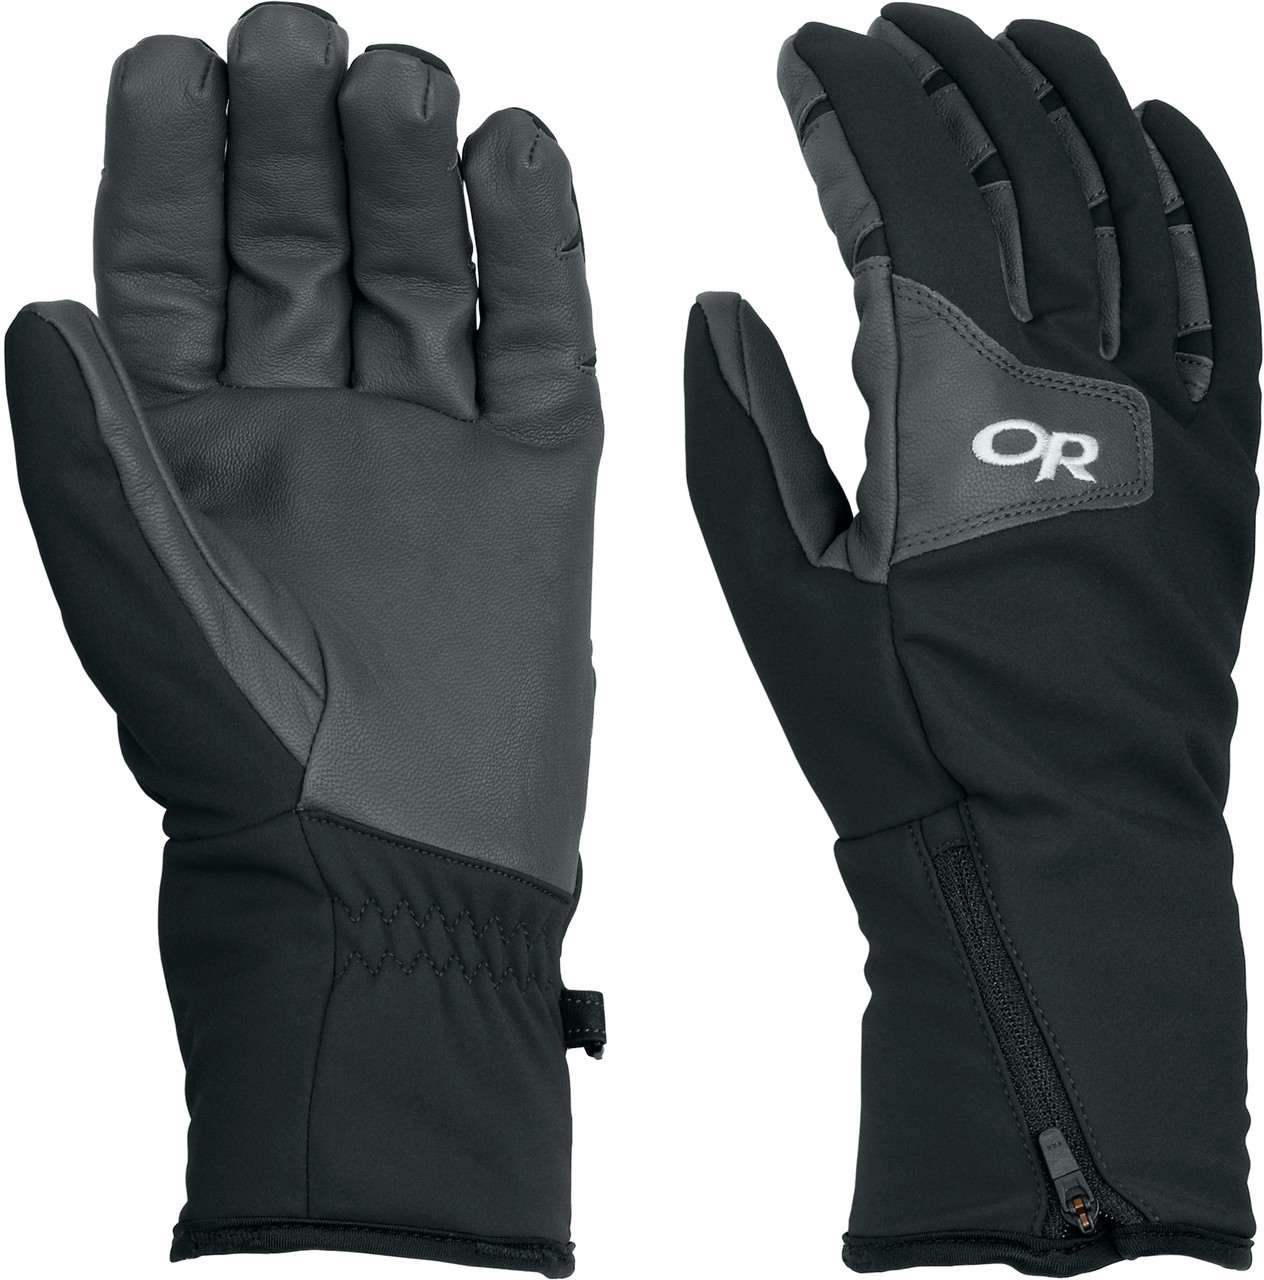 StormTracker Gloves Black/Charcoal